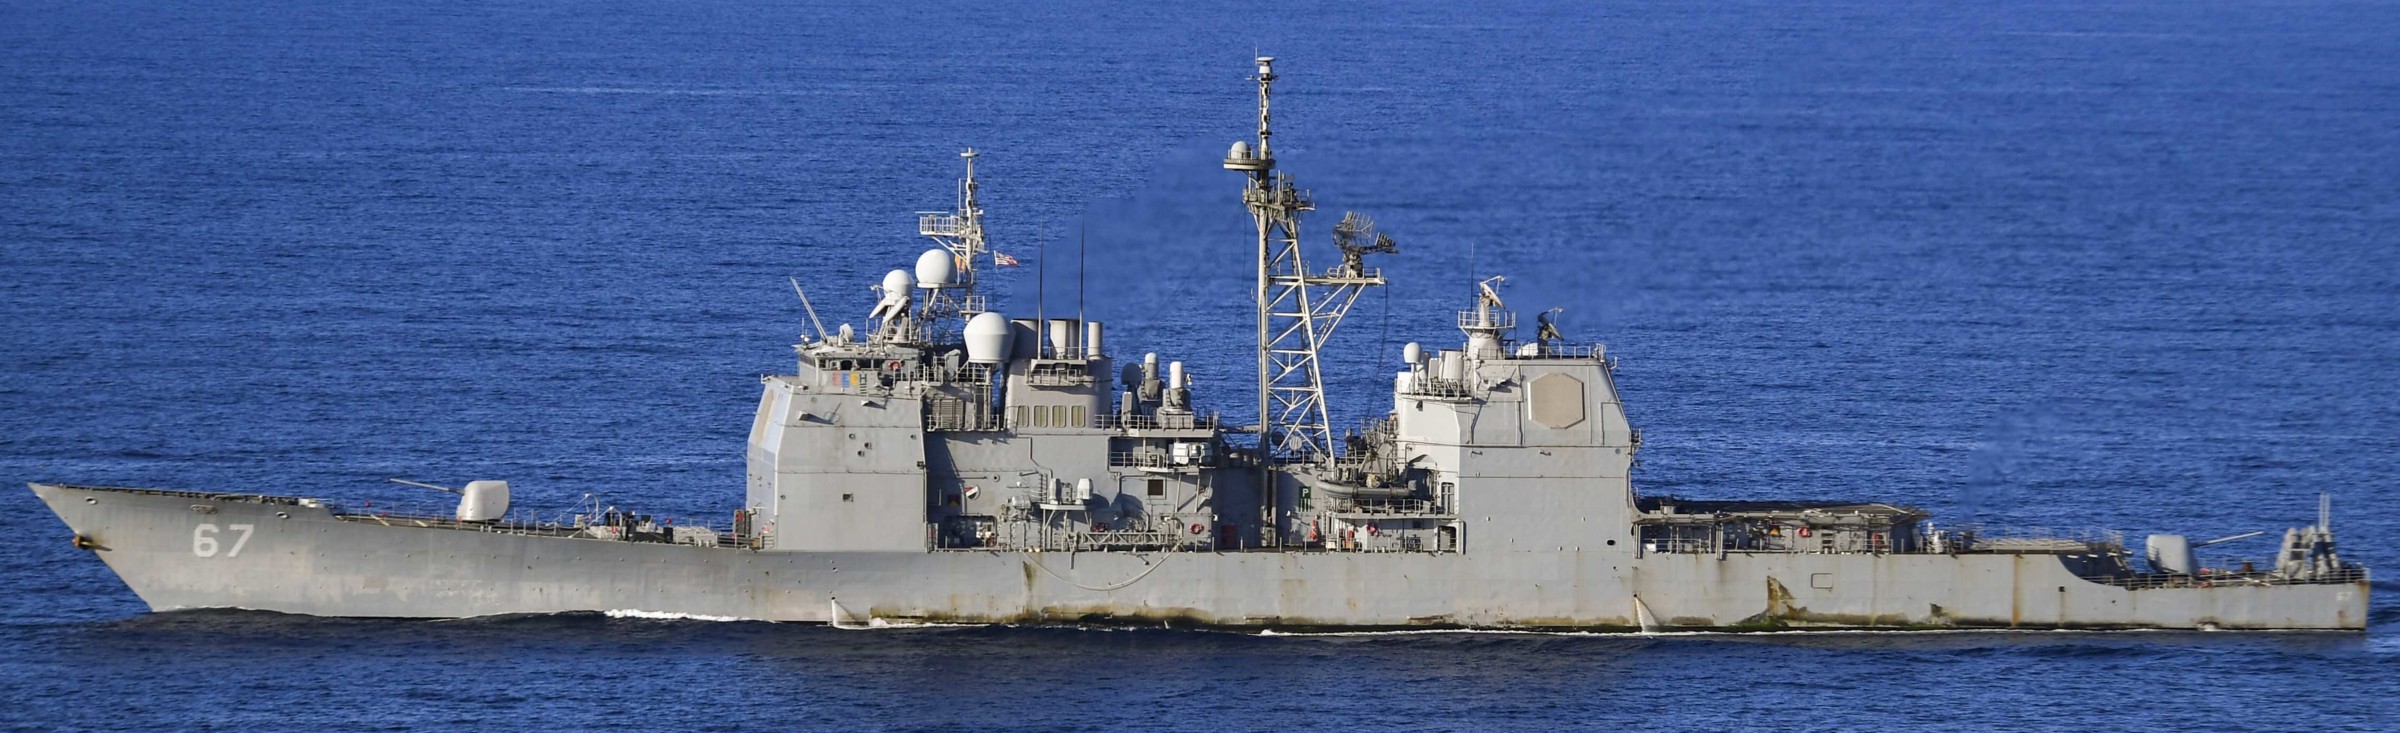 cg-67 uss shiloh ticonderoga class guided missile cruiser aegis us navy south china sea 102